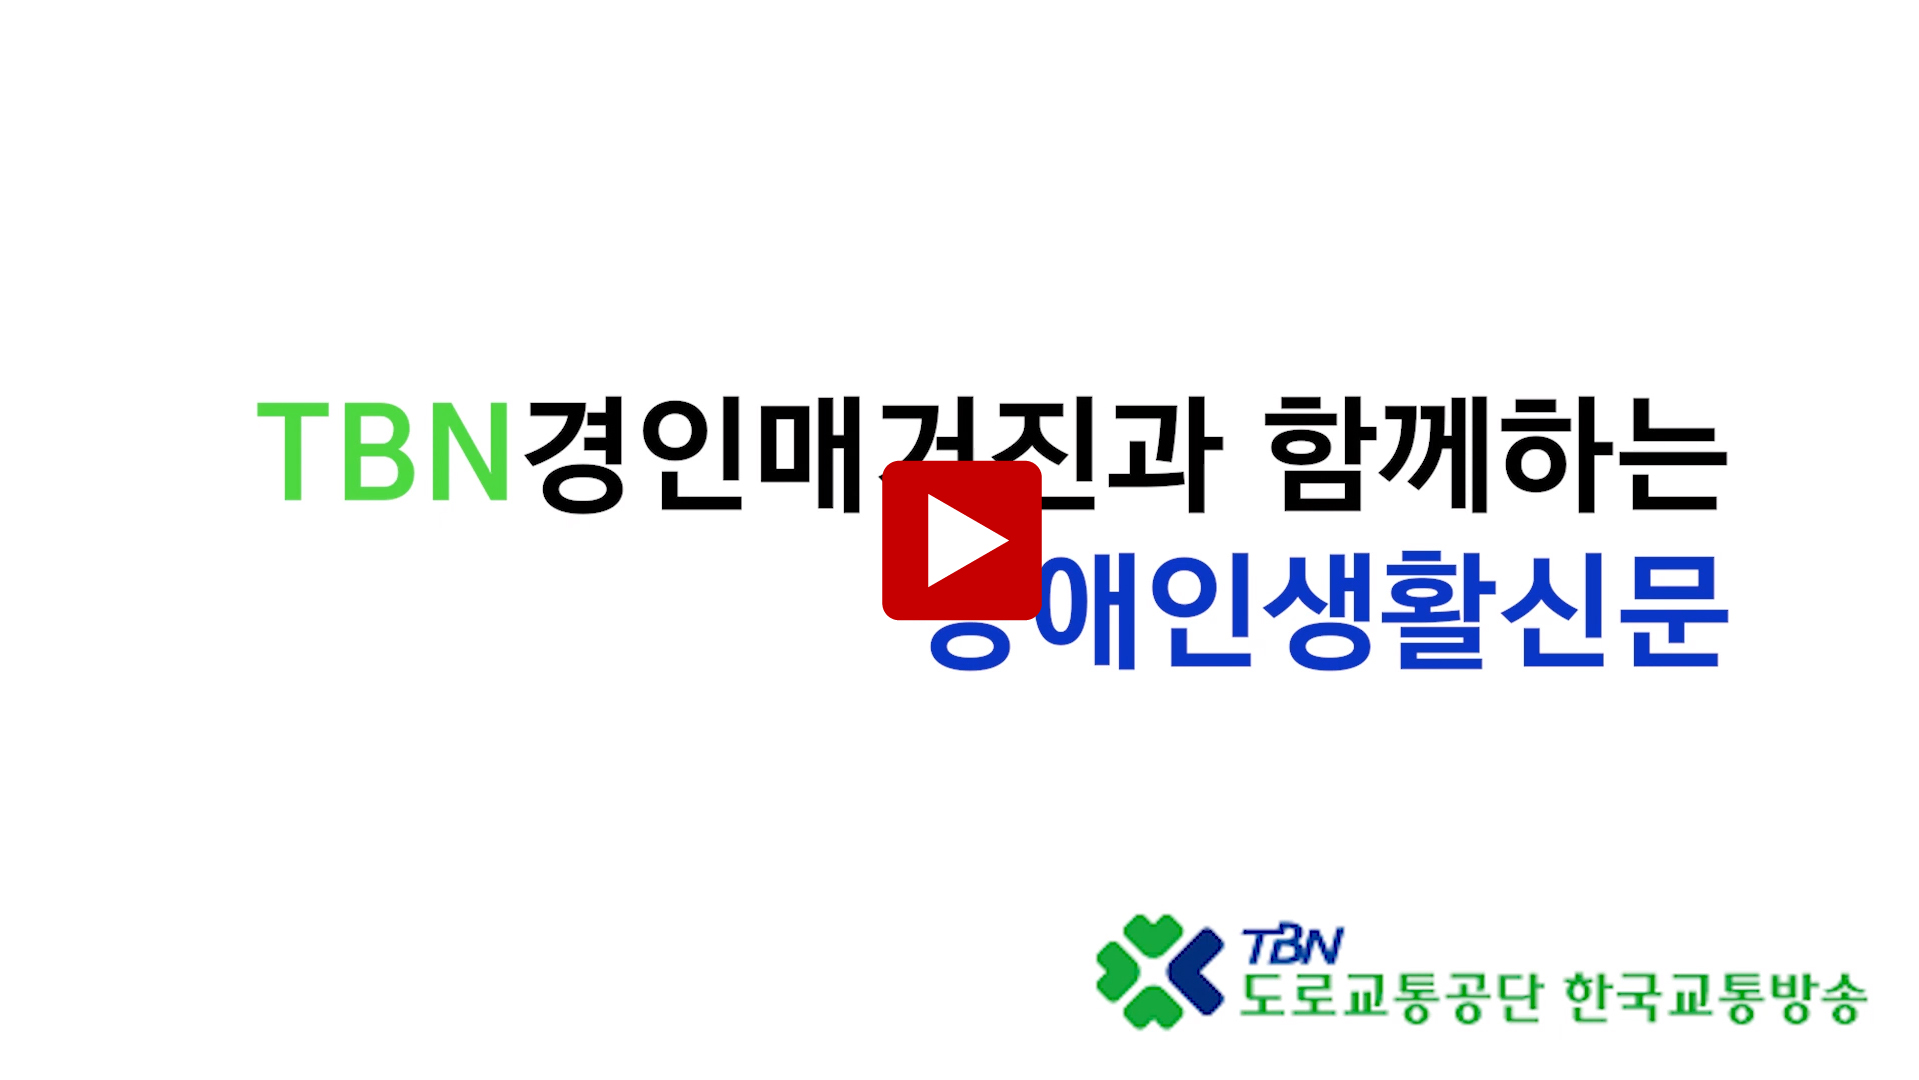 TBN경인매거진과 함께하는 장애인생활신문 -2022년 1월 12일 방송